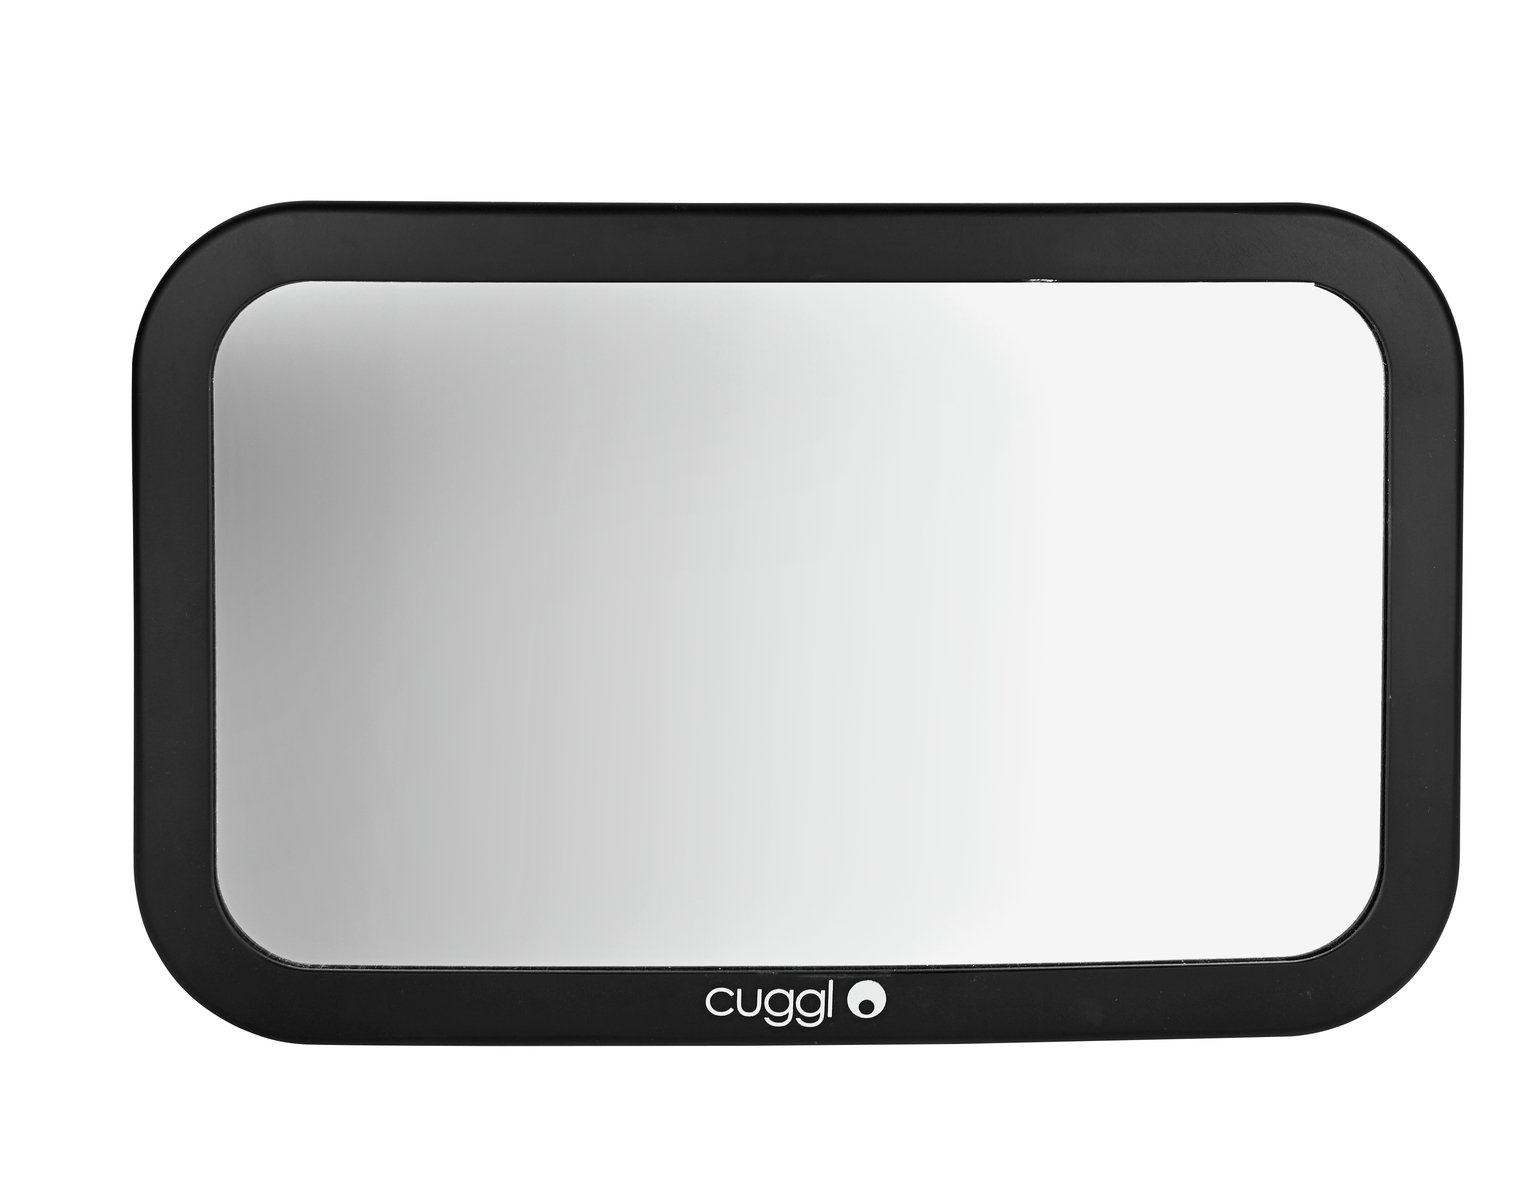 argos car seat mirror